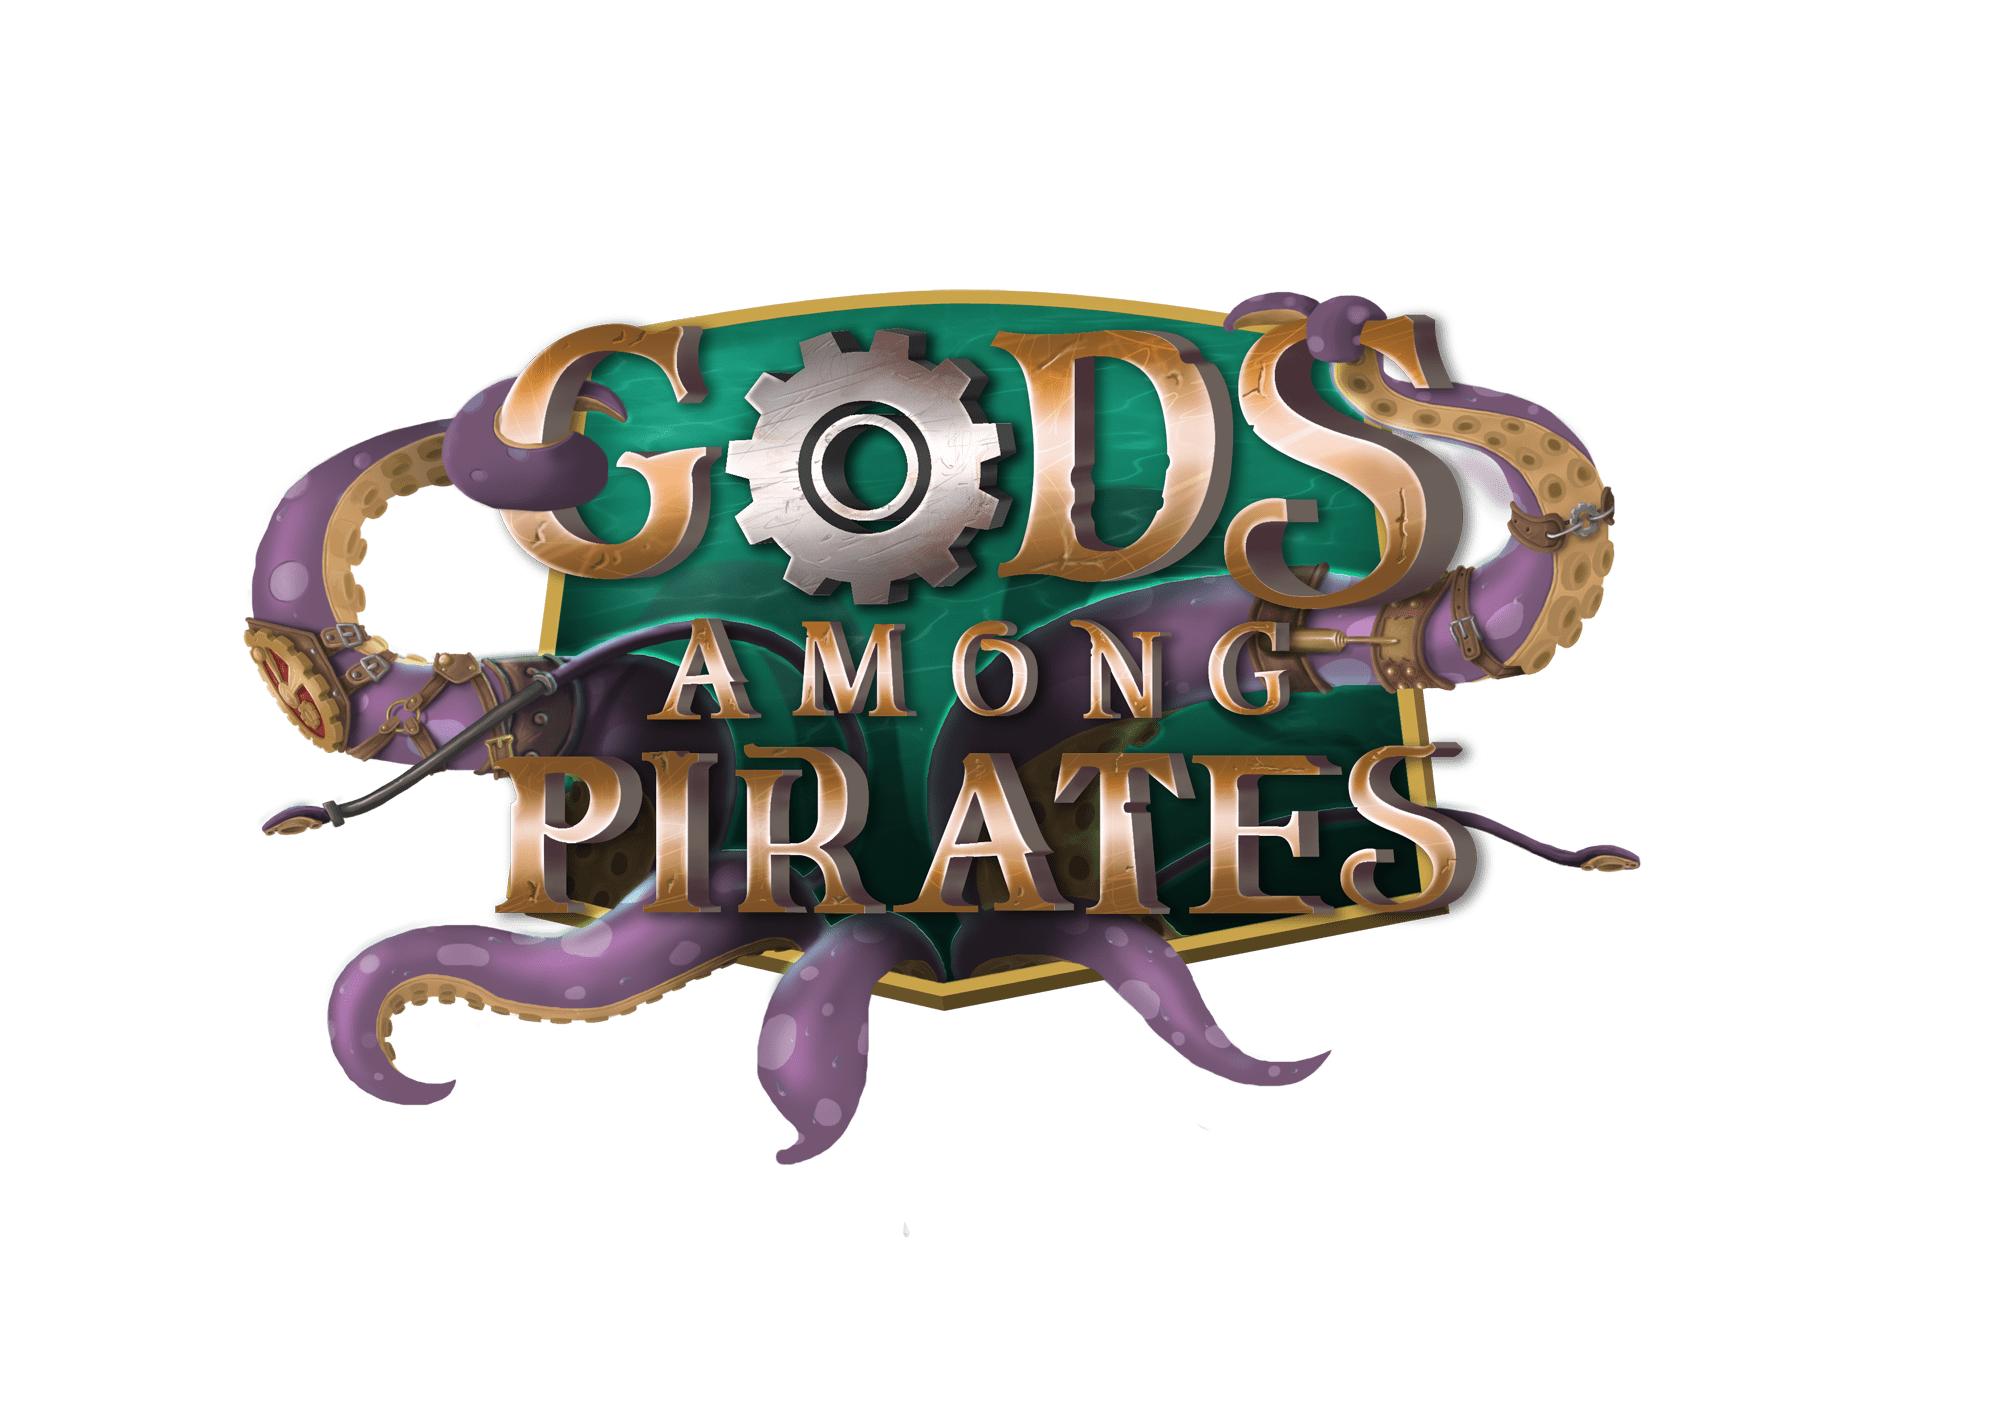 Gods Among Pirates